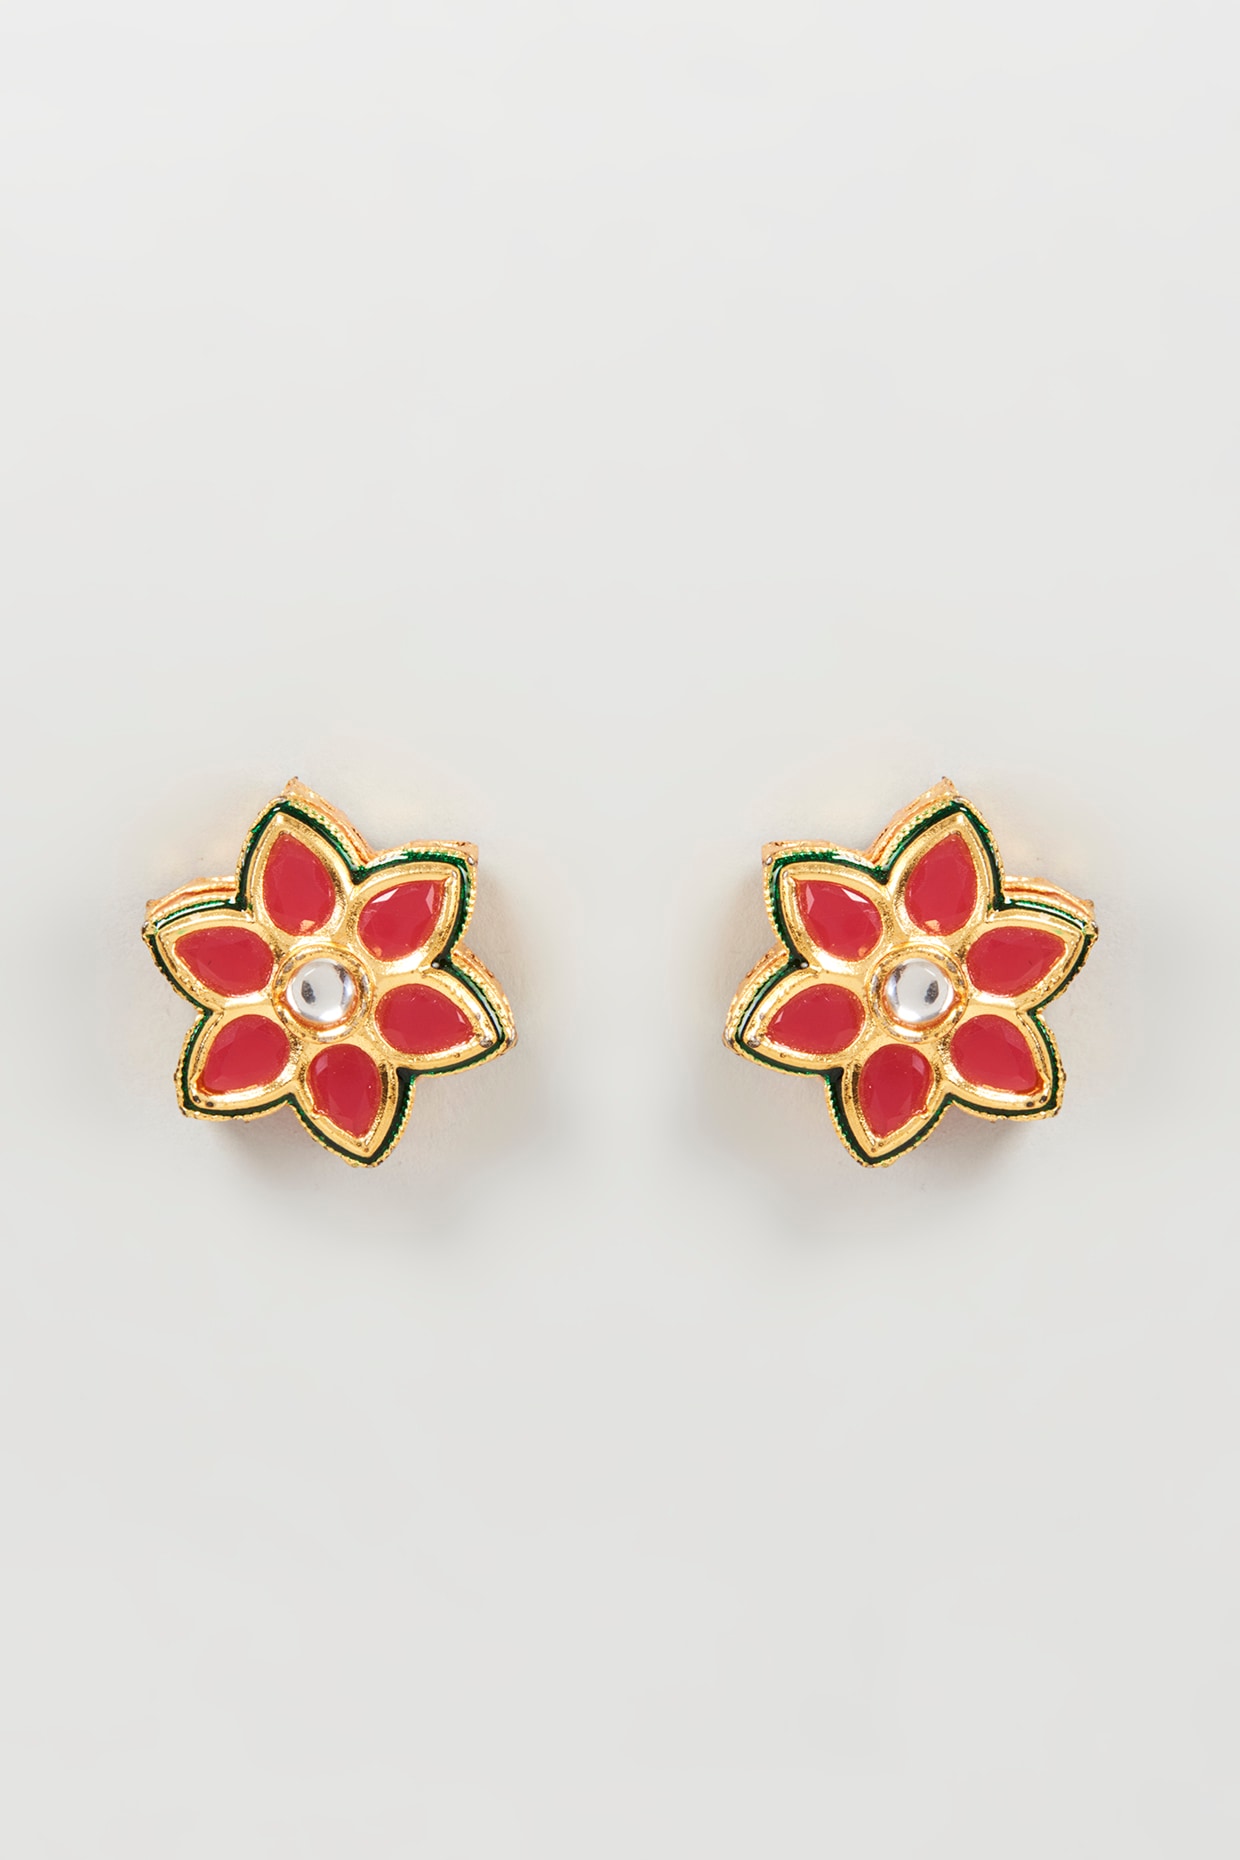 Korean Fashion Silver Needle Red Rose Flower Flocking Stud Earrings for  Women Imitation Pearl Earring Wedding Party Jewelry Gift - AliExpress